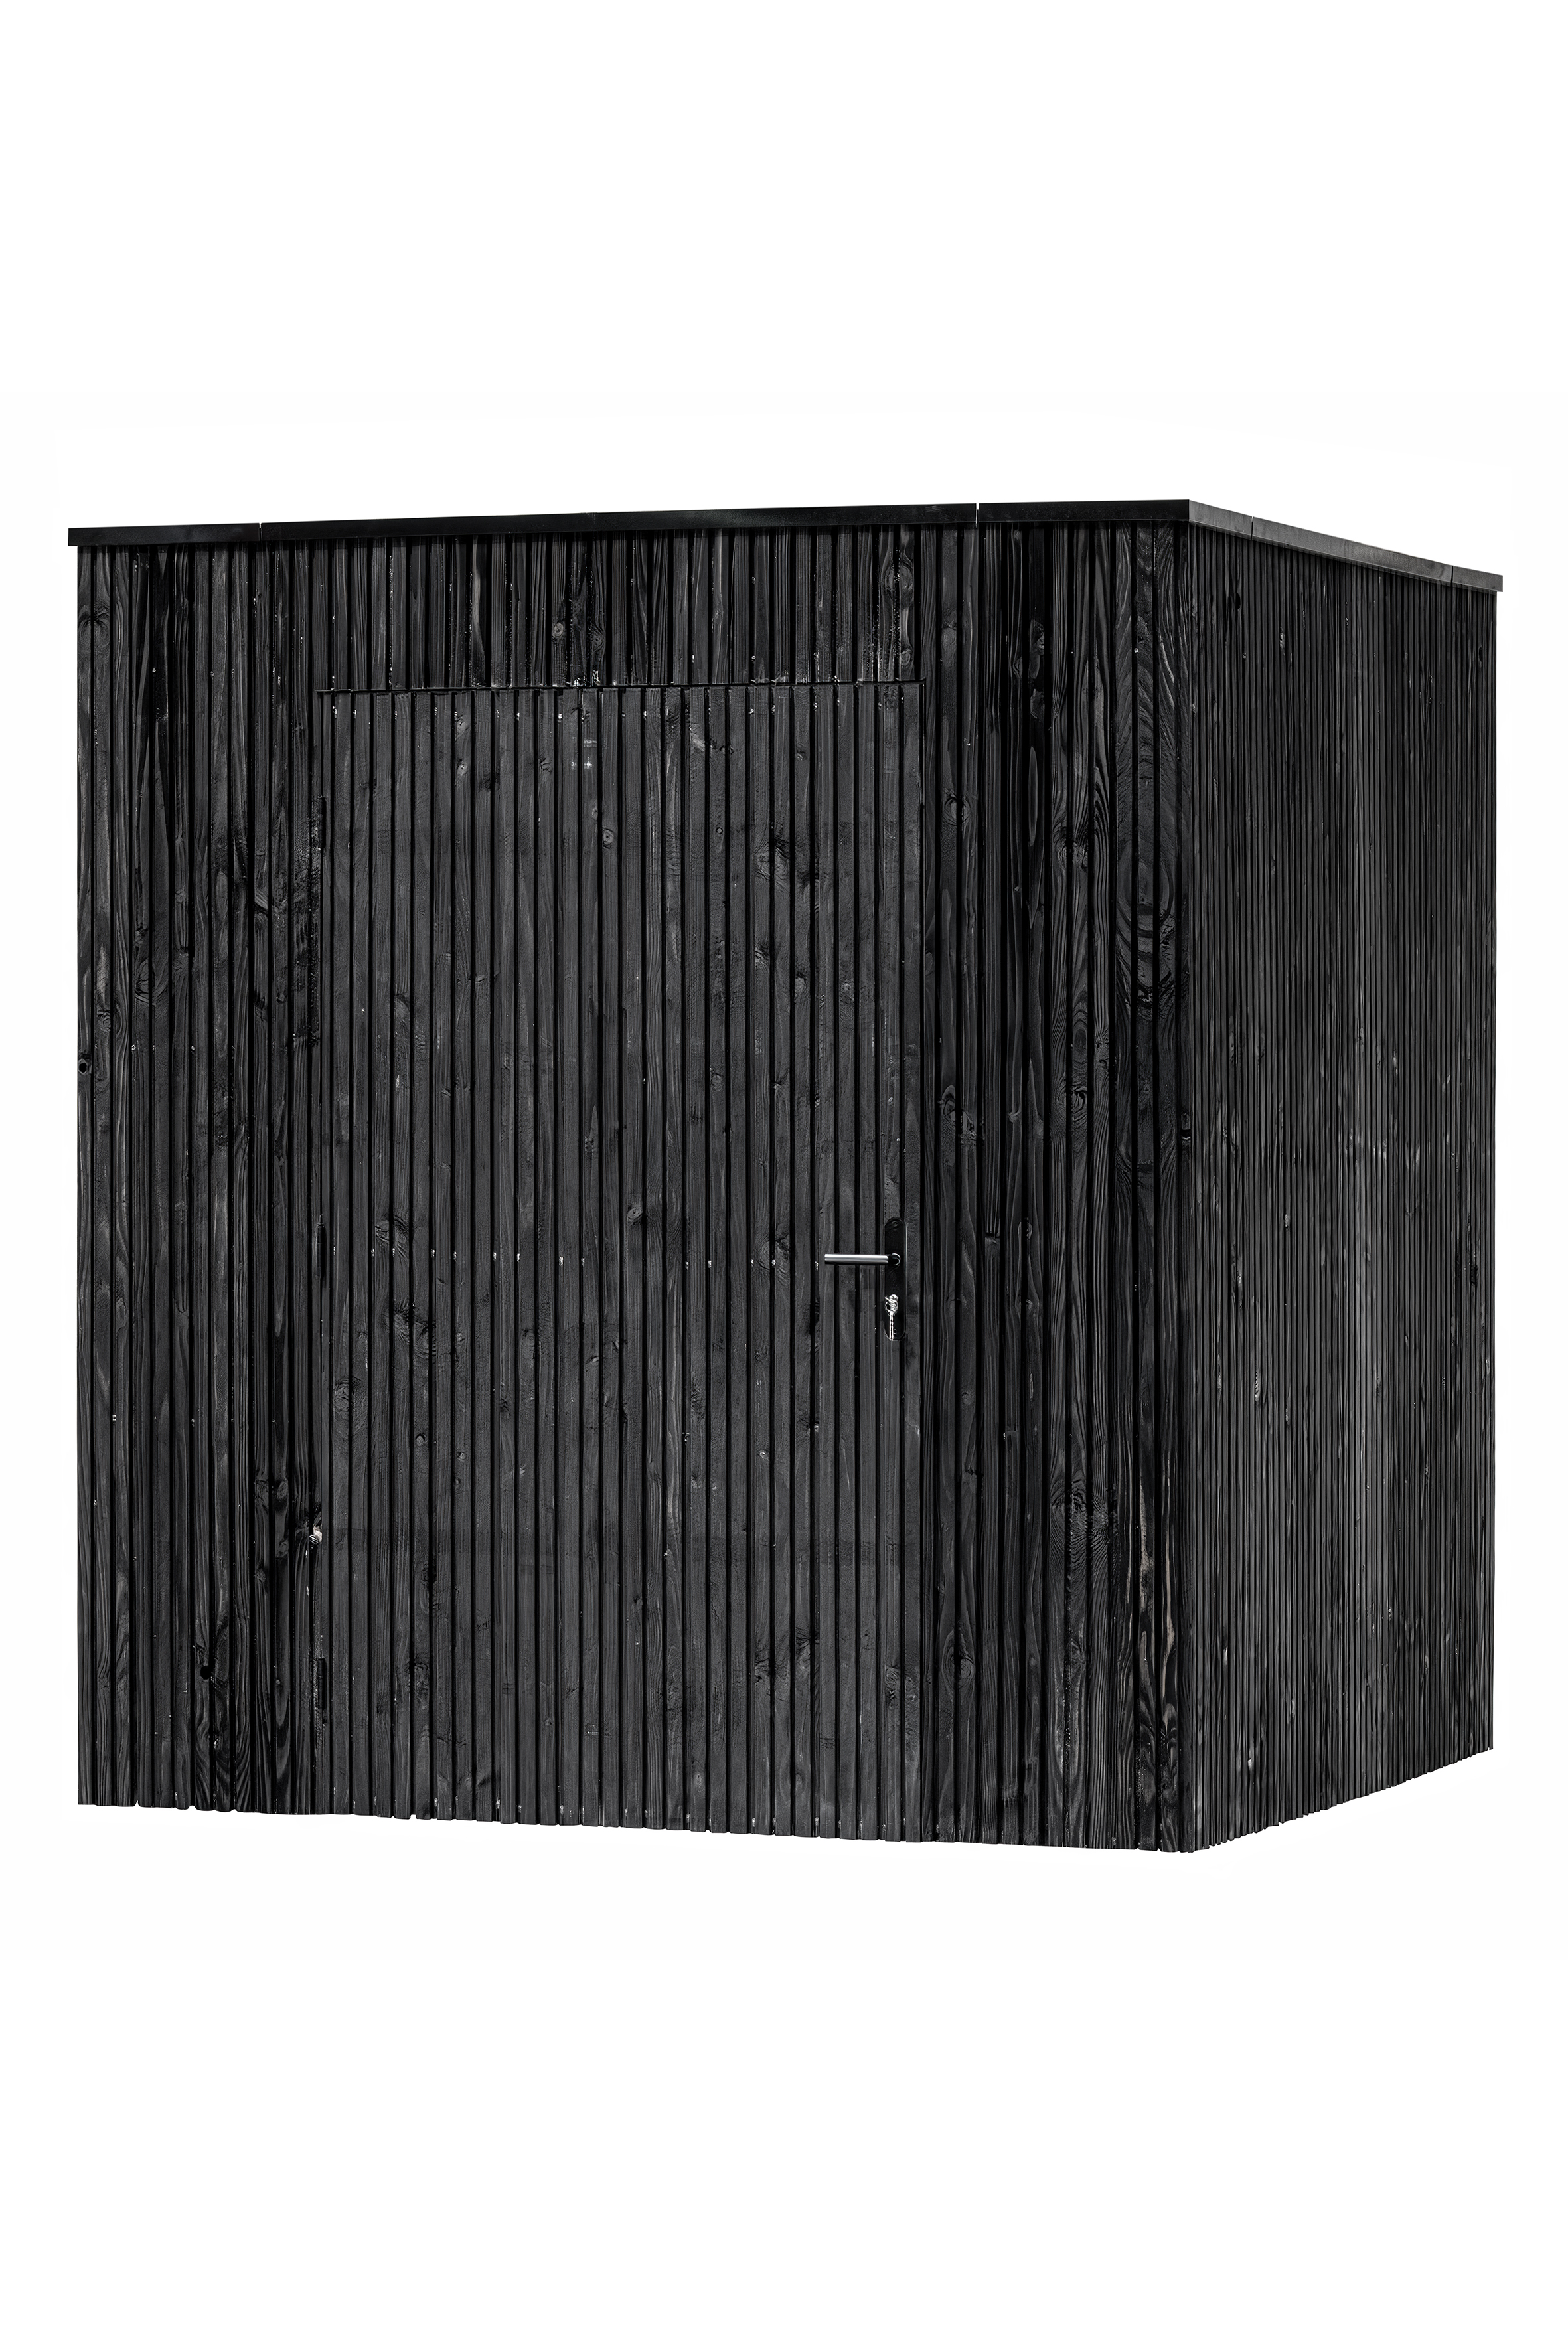 Douglas fir storage Brooklyn black coated 219 x 219 x 241 cm incl. single door